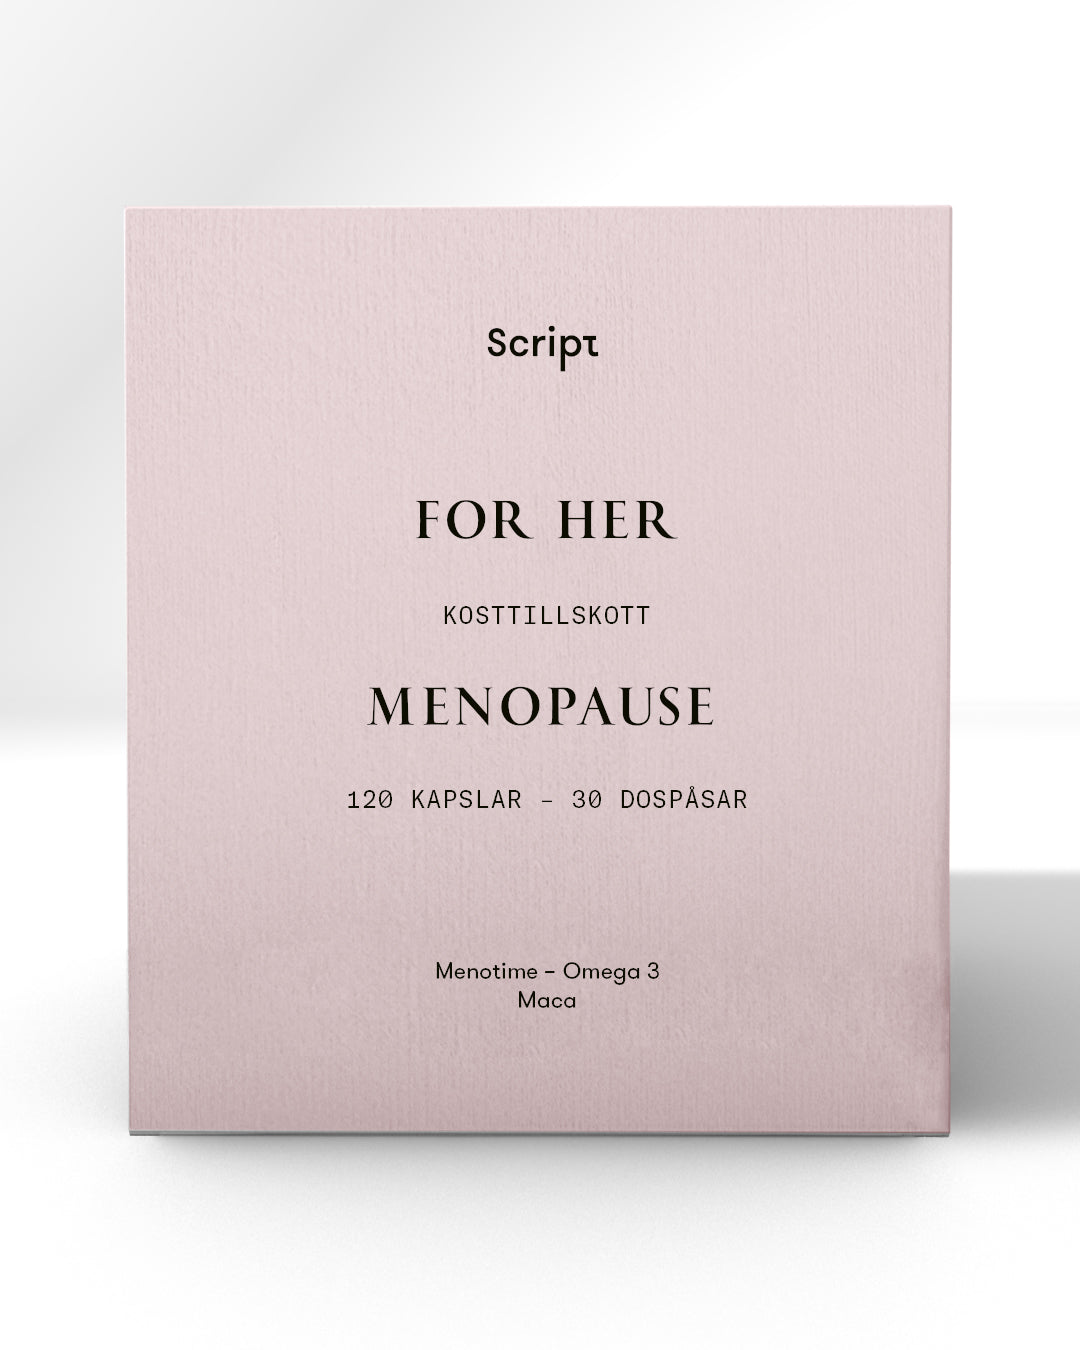 For Her Menopause Kit - 30 dospåsar